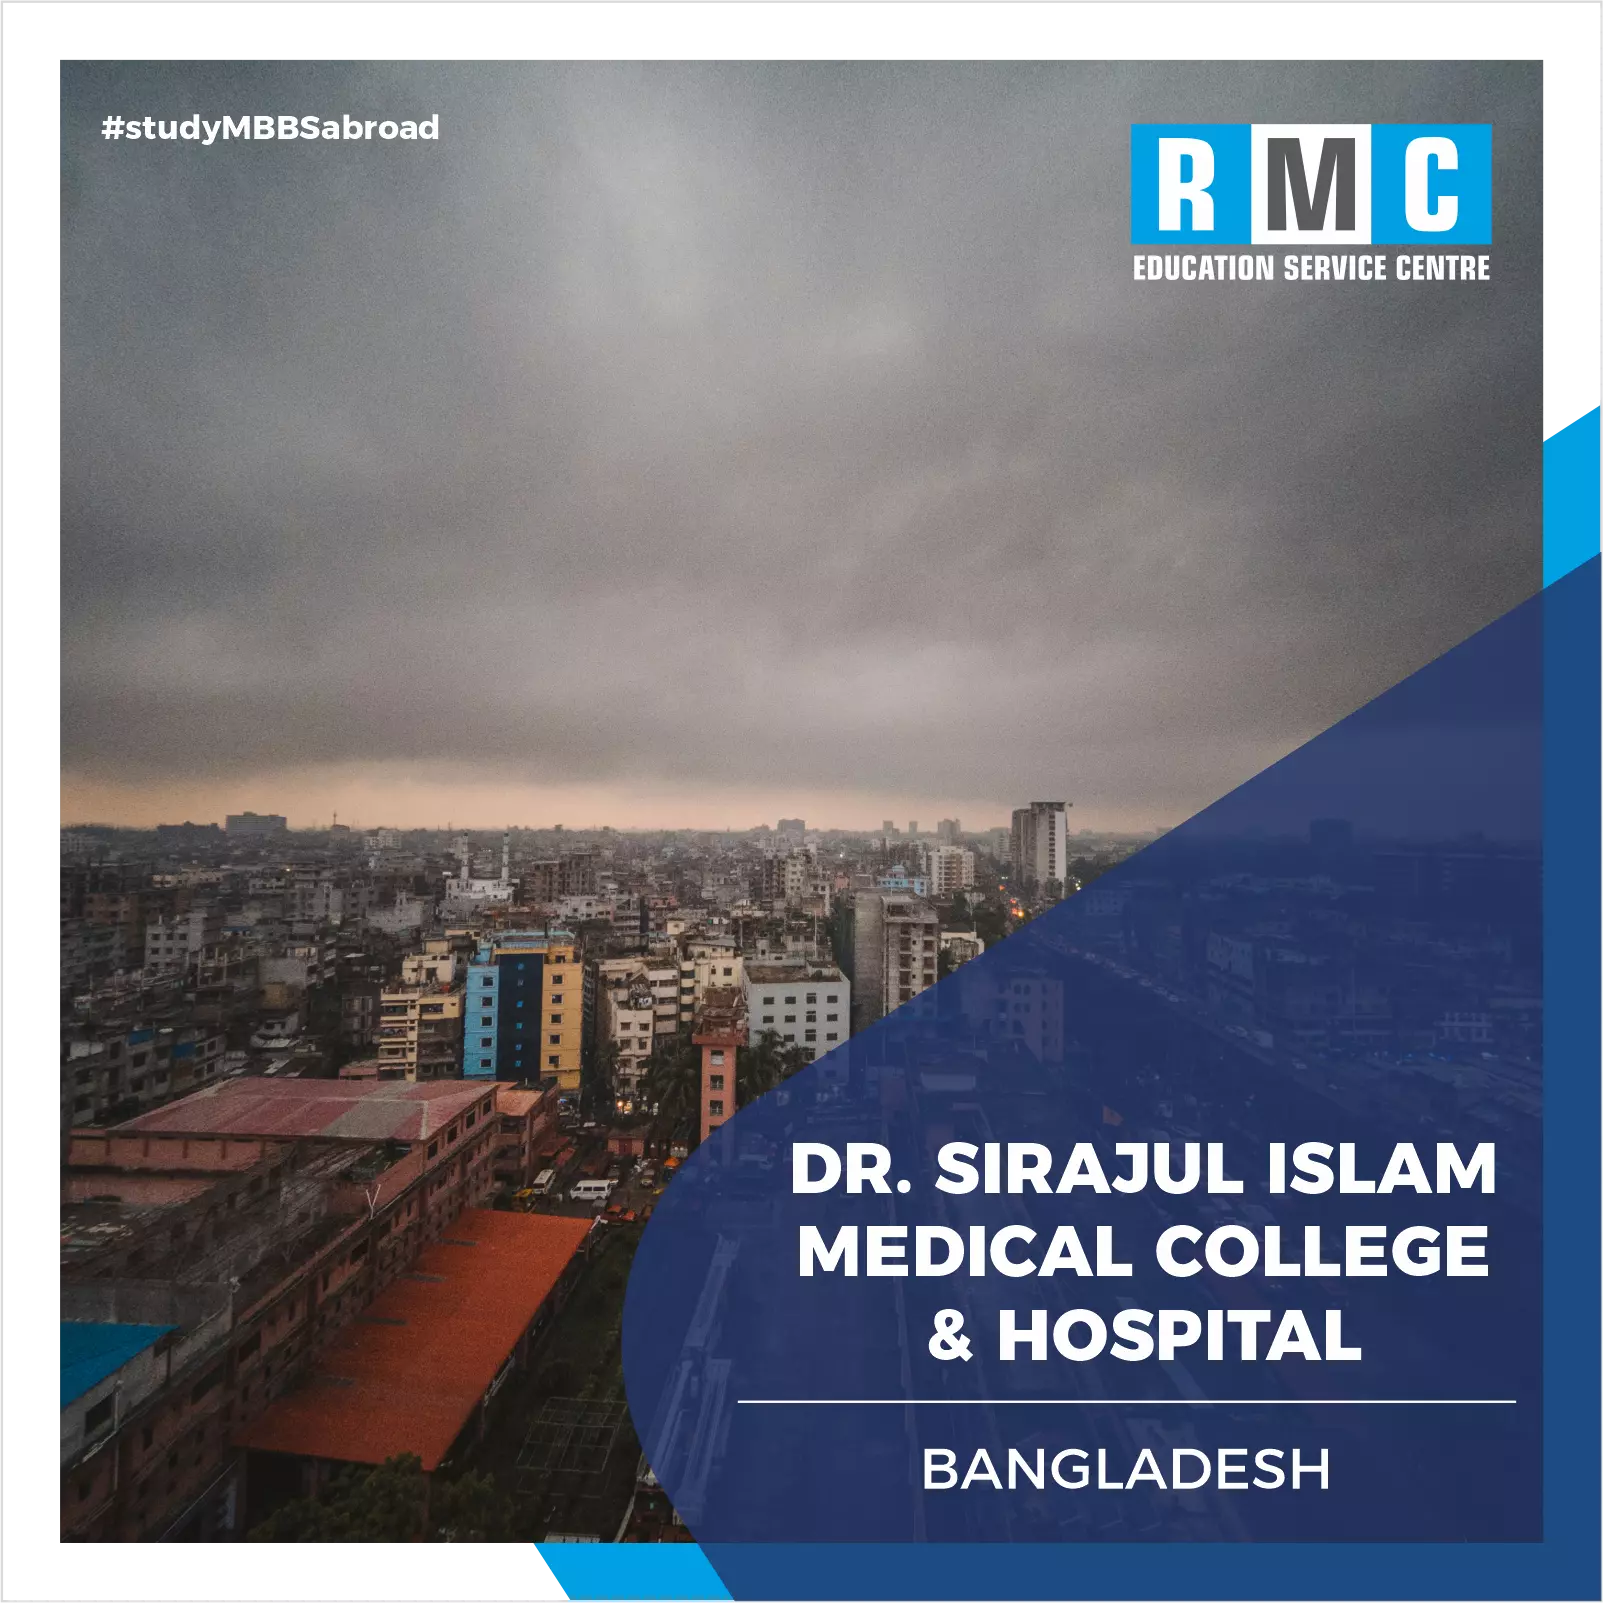 Dr. Sirajul Islam Medical College & Hospital